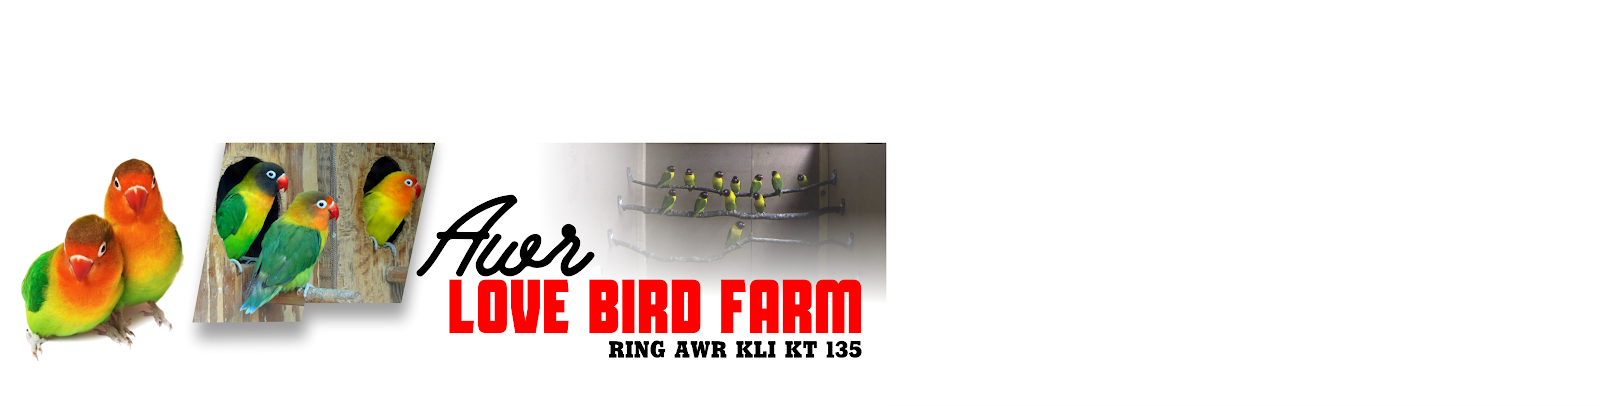 AWR BIRD FARM